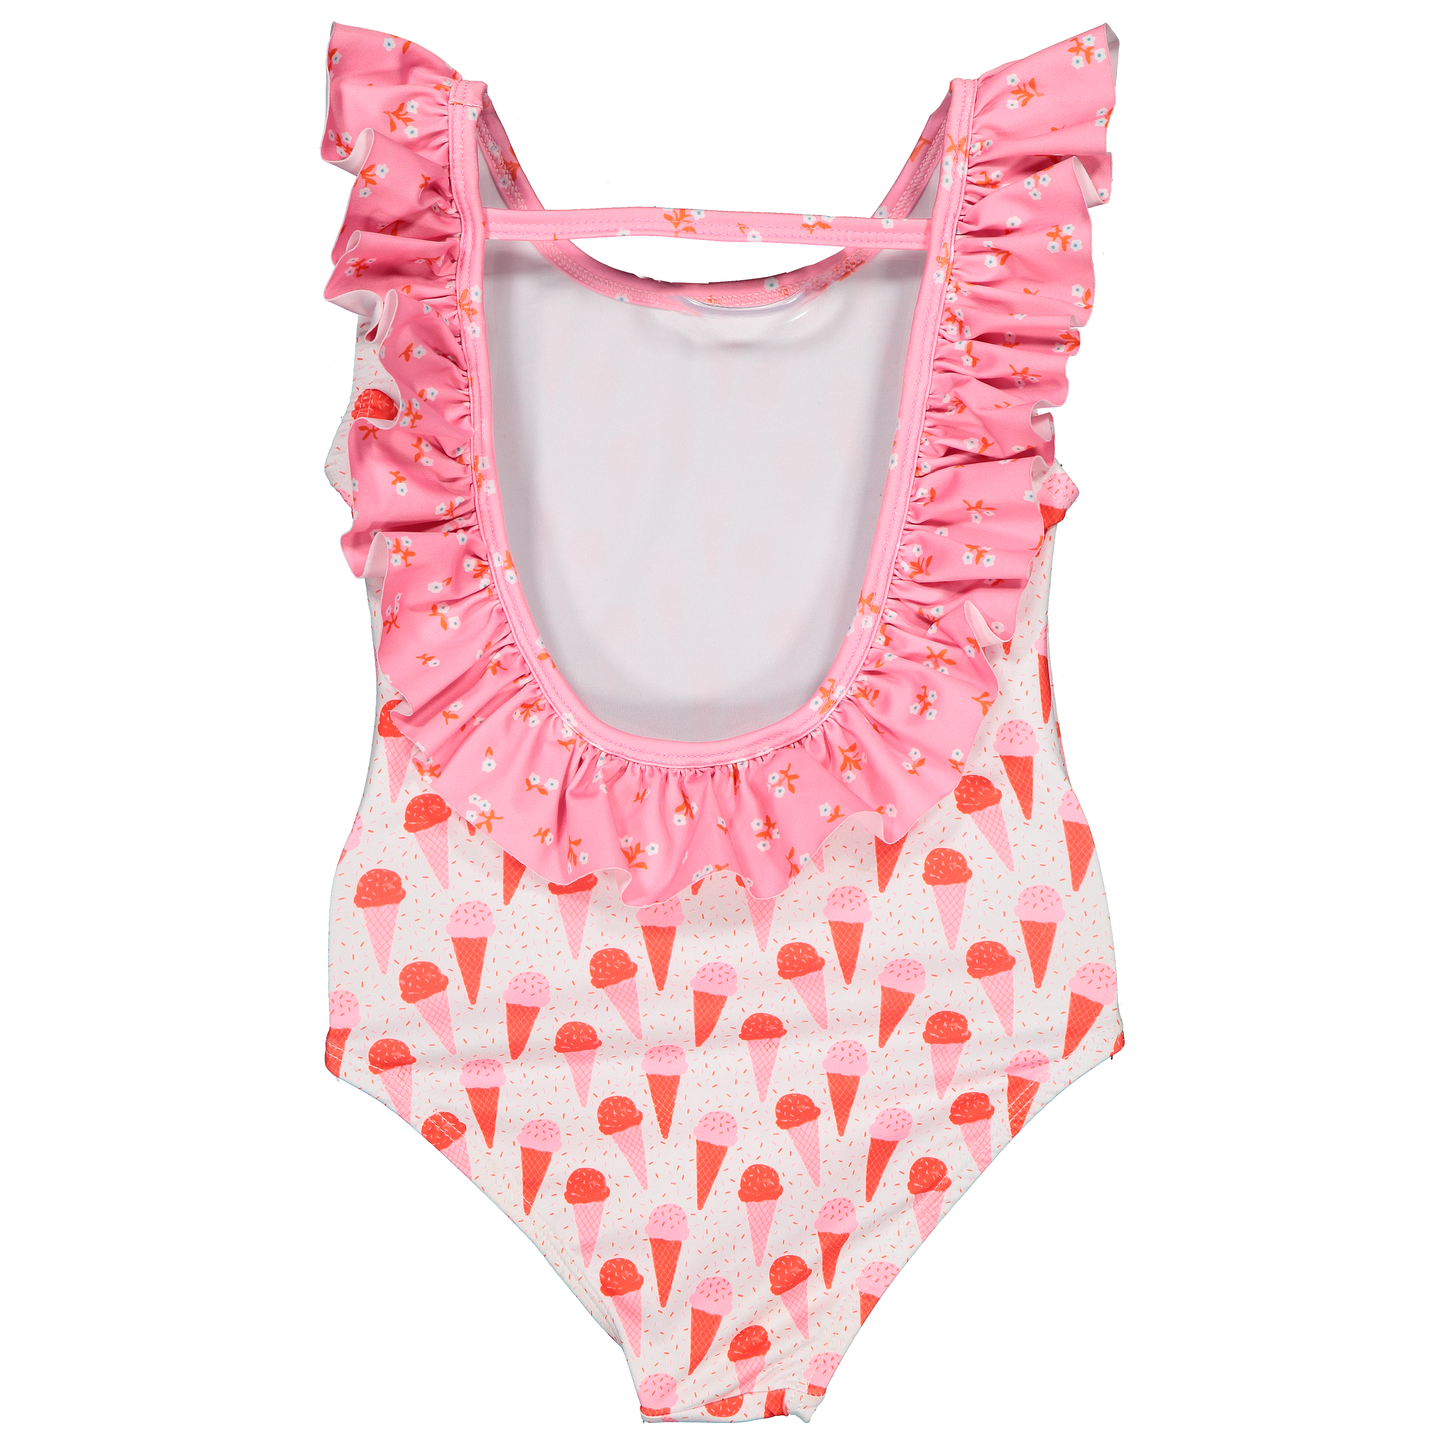 Little girls pink designer swim costume by Paperboat - Adora